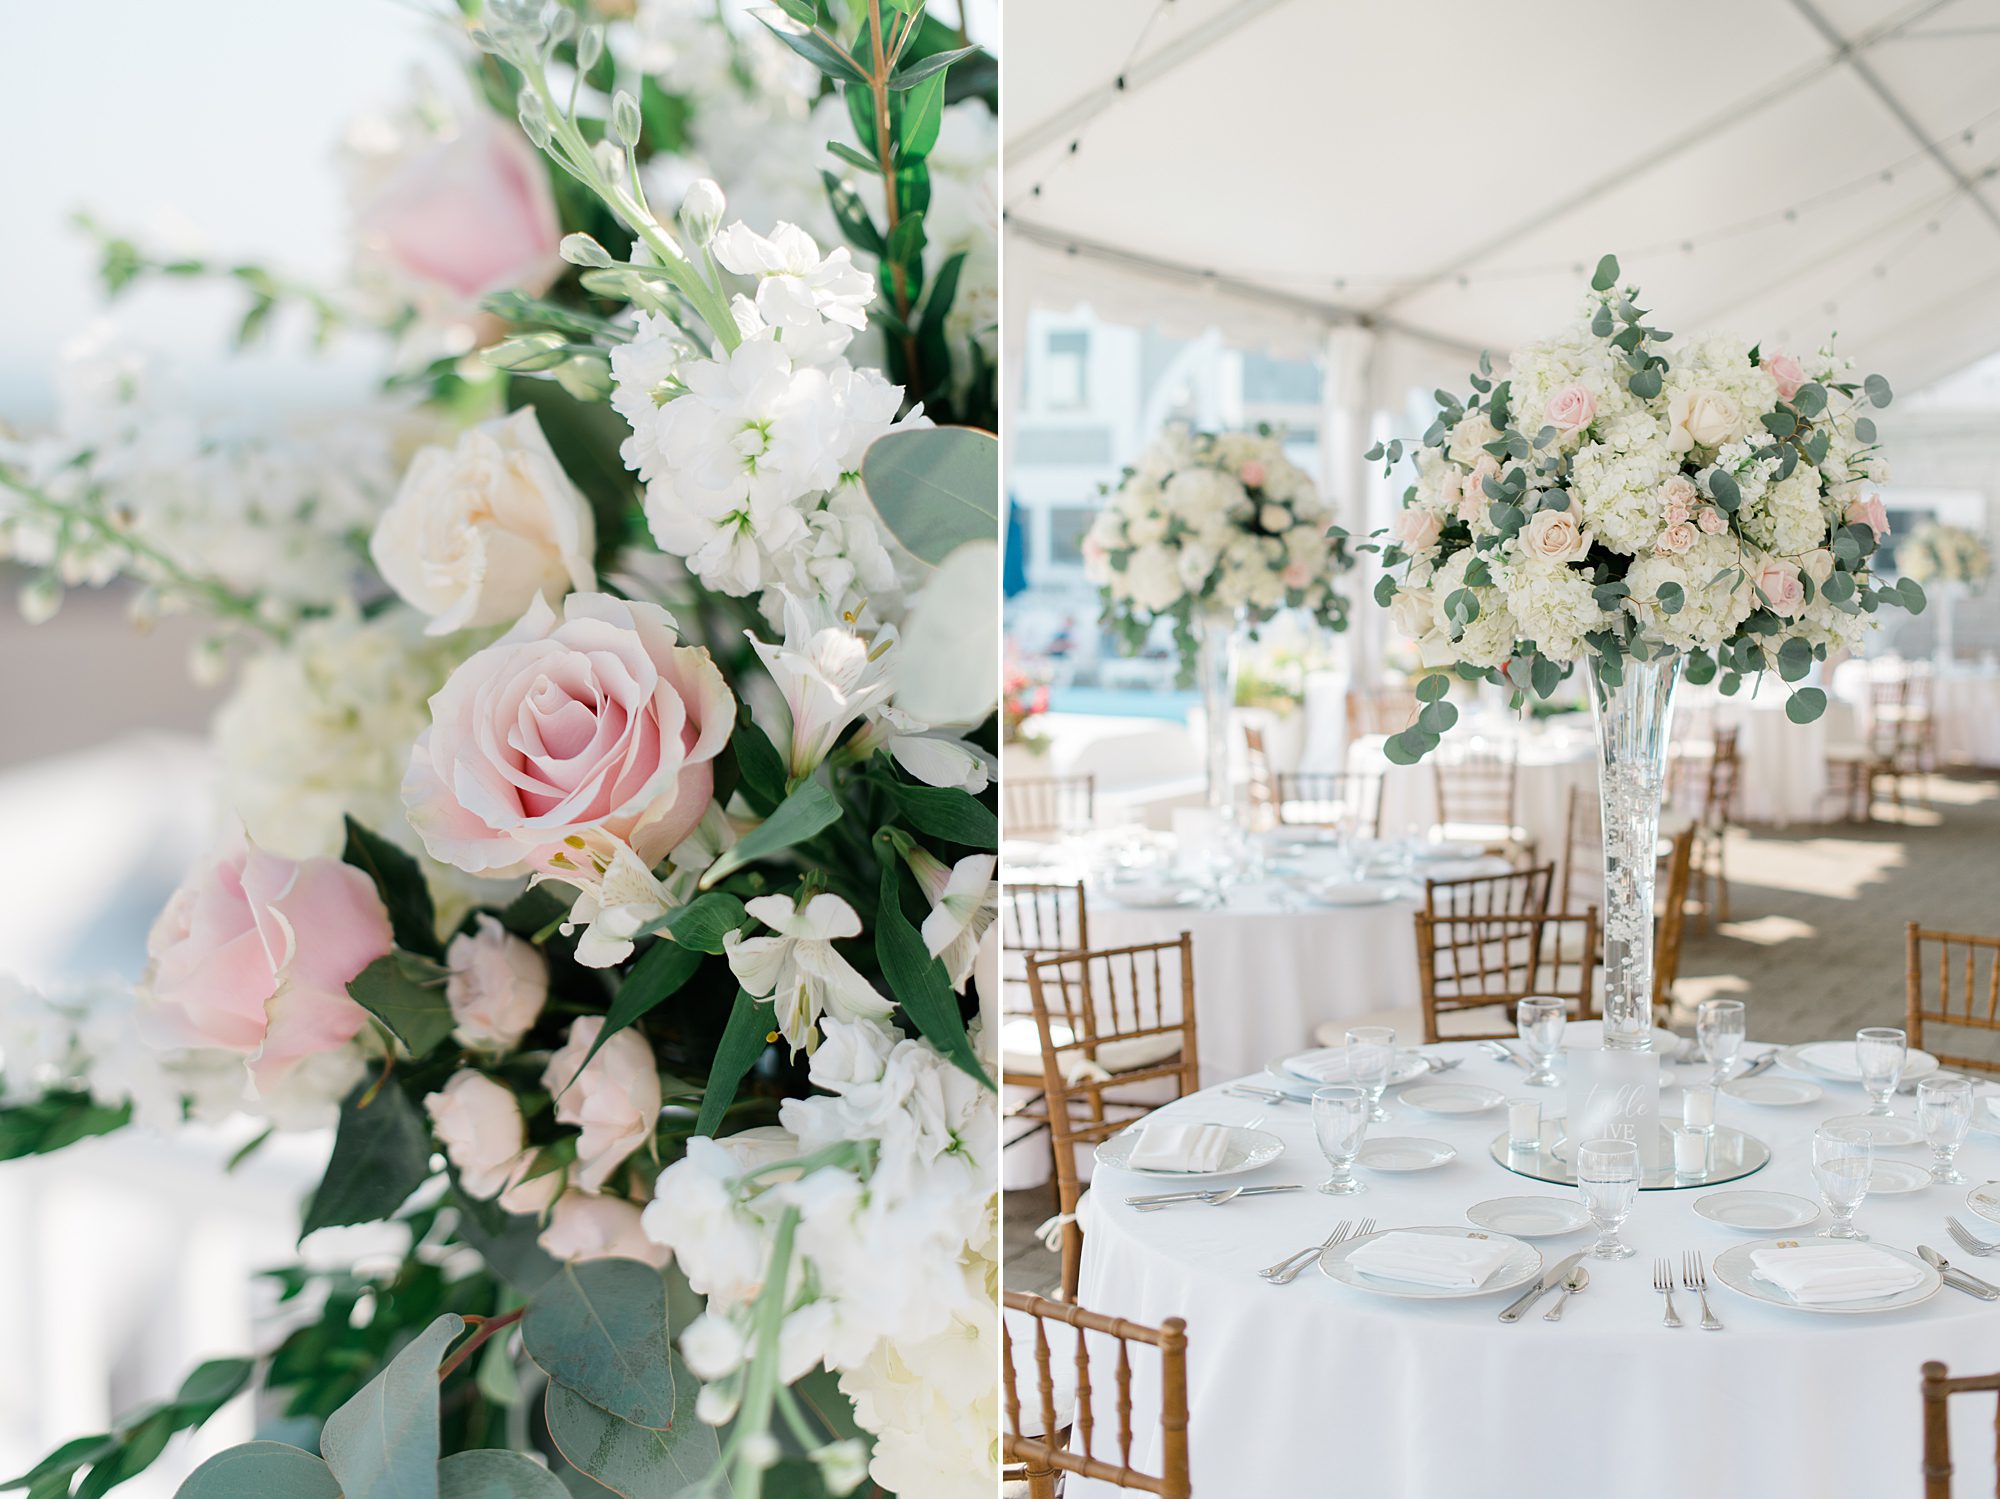 stunning flower centerpieces at Elegant Jersey Shore Wedding reception